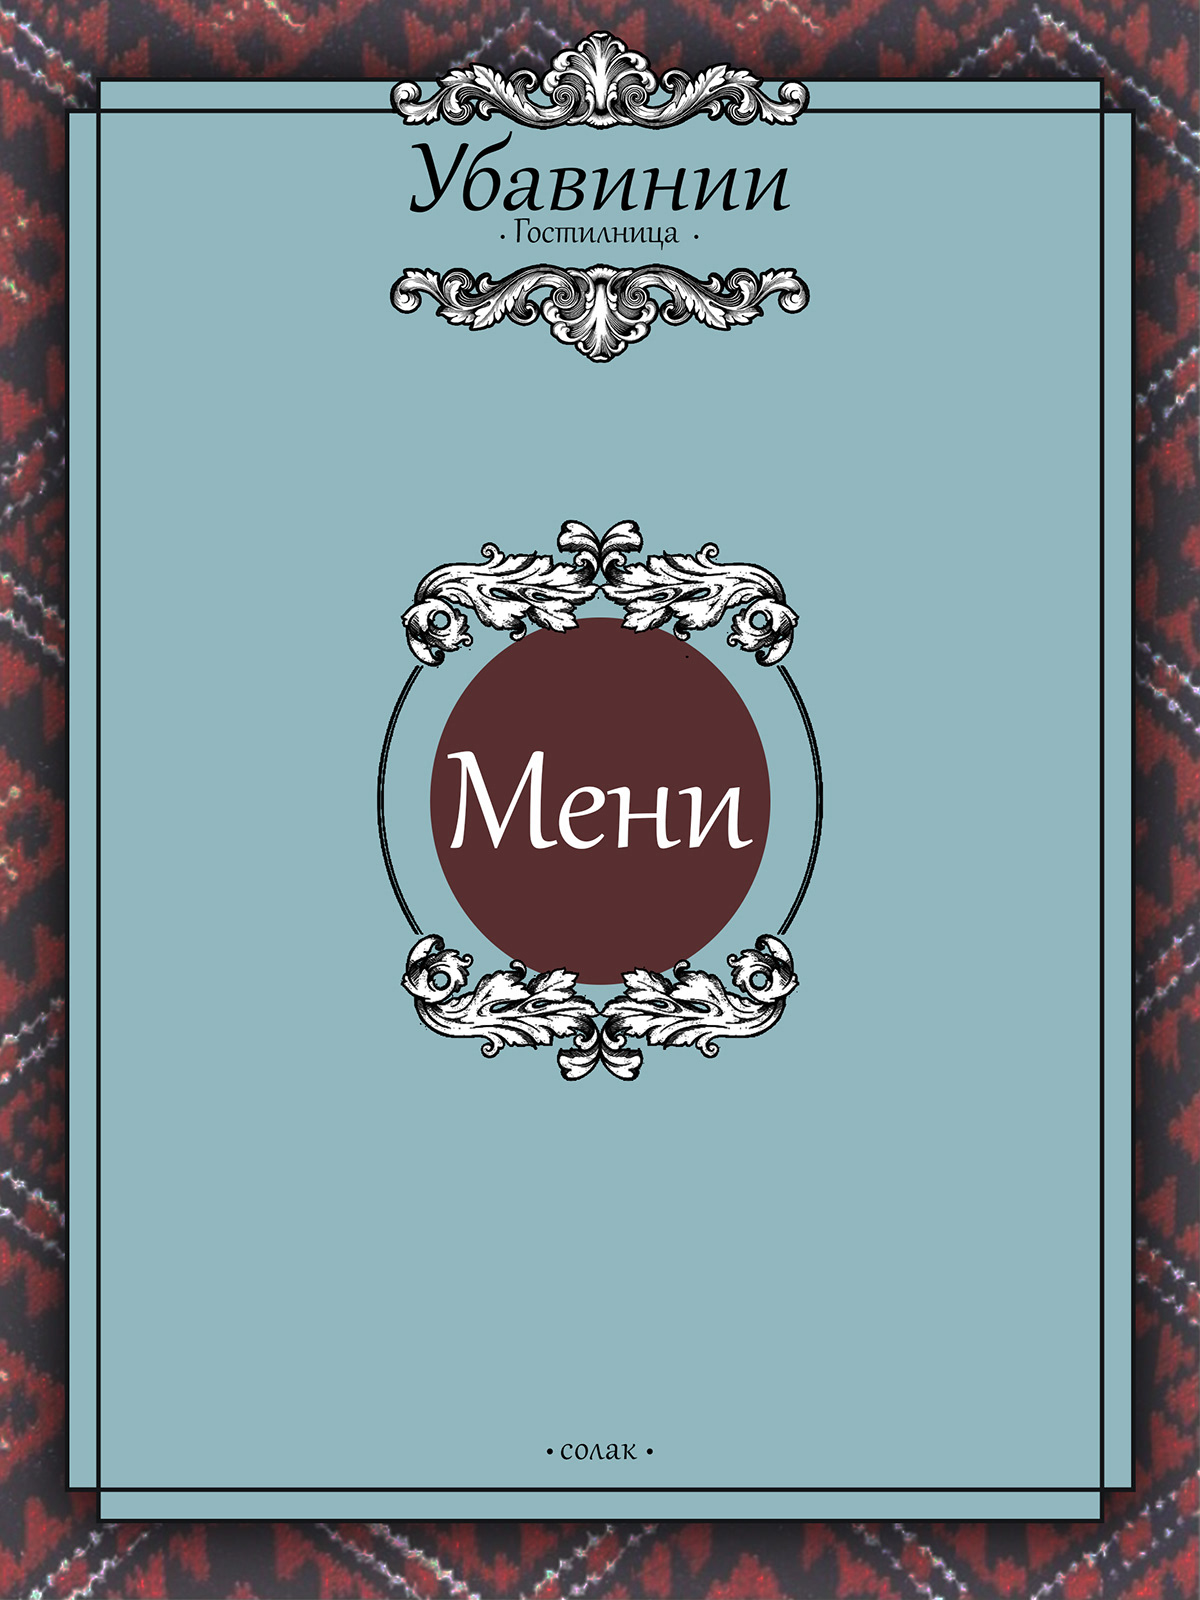 Macedonian traditional restaurant menu design